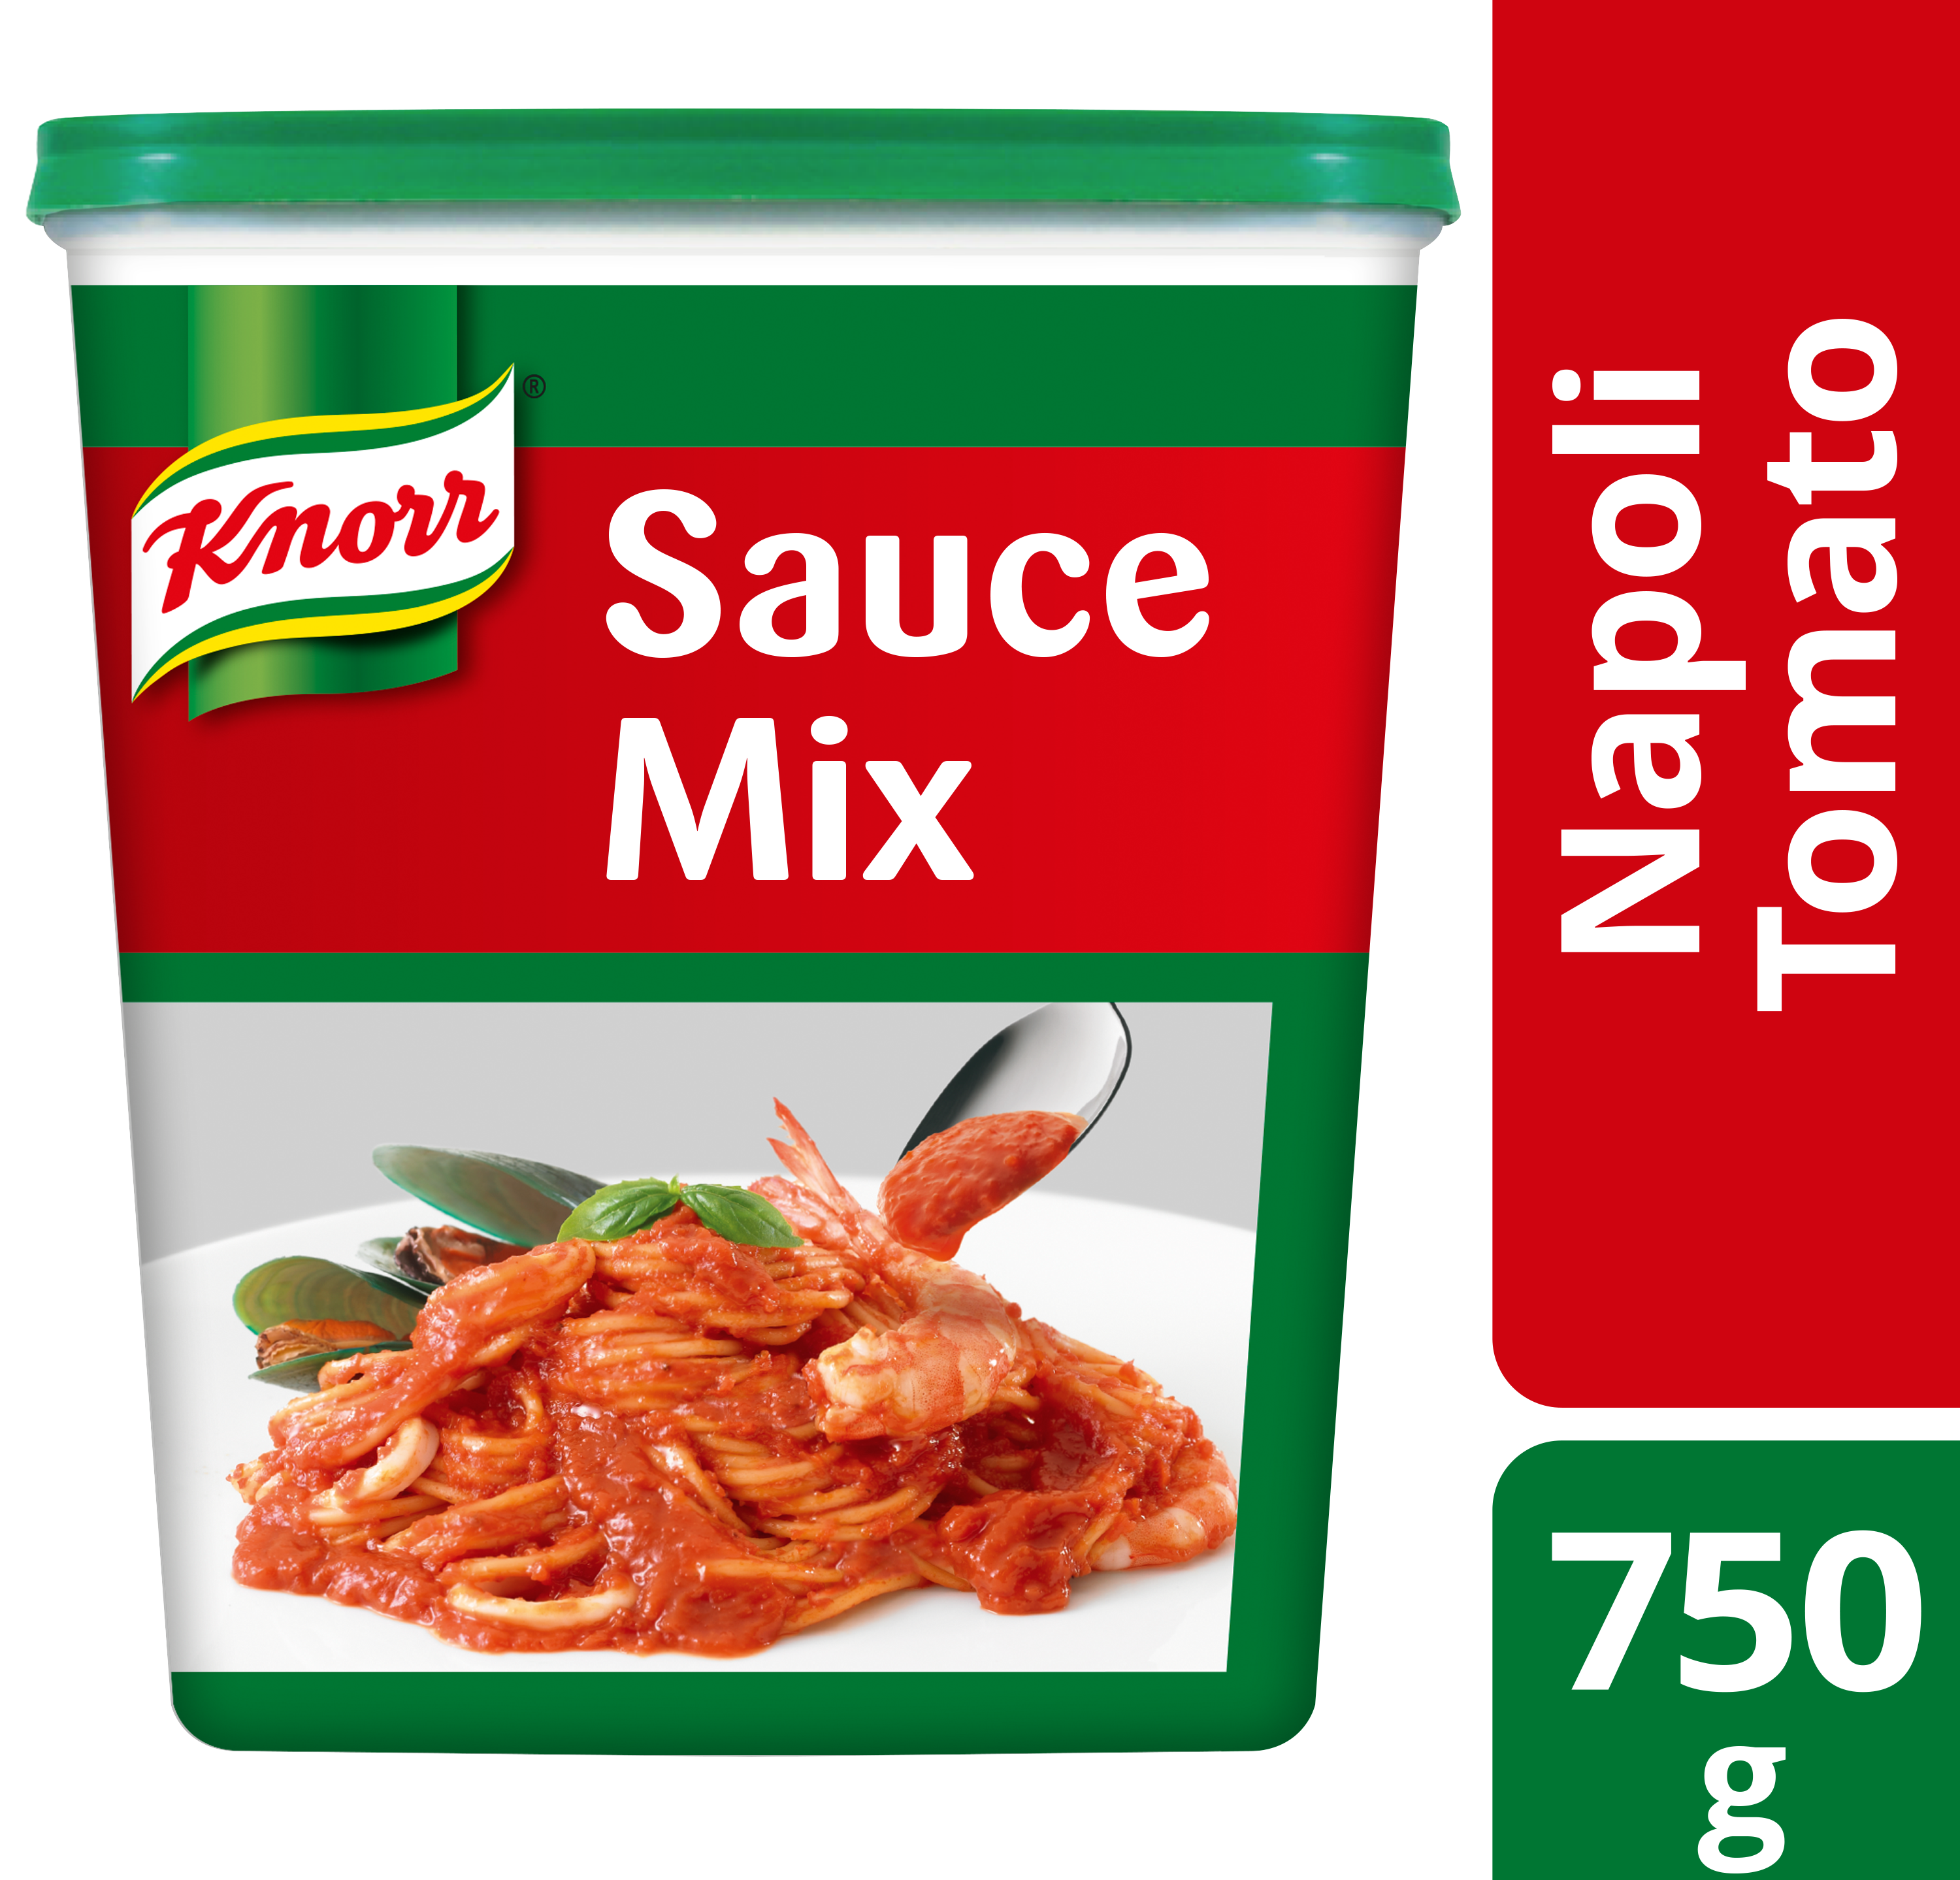 Spaghetti clipart pasta sauce. Knorr napoli tomato mix